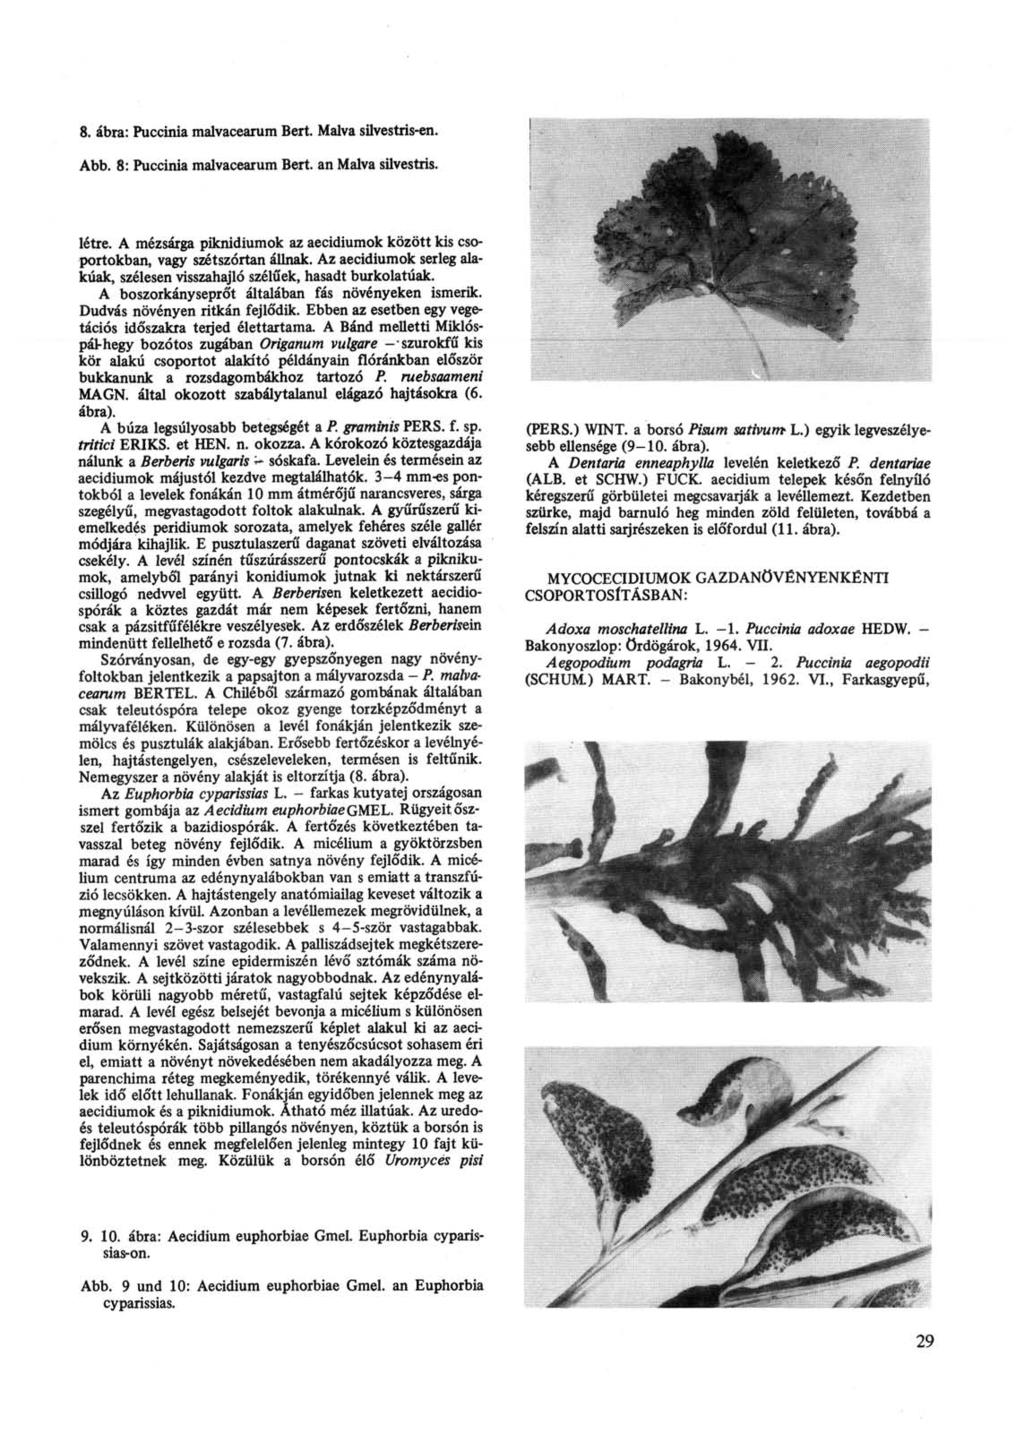 8. ábra: Puccinia malvacearum Bert. Malva silvestris-en. Abb. 8: Puccinia malvacearum Bert, an Malva silvestris. létre.